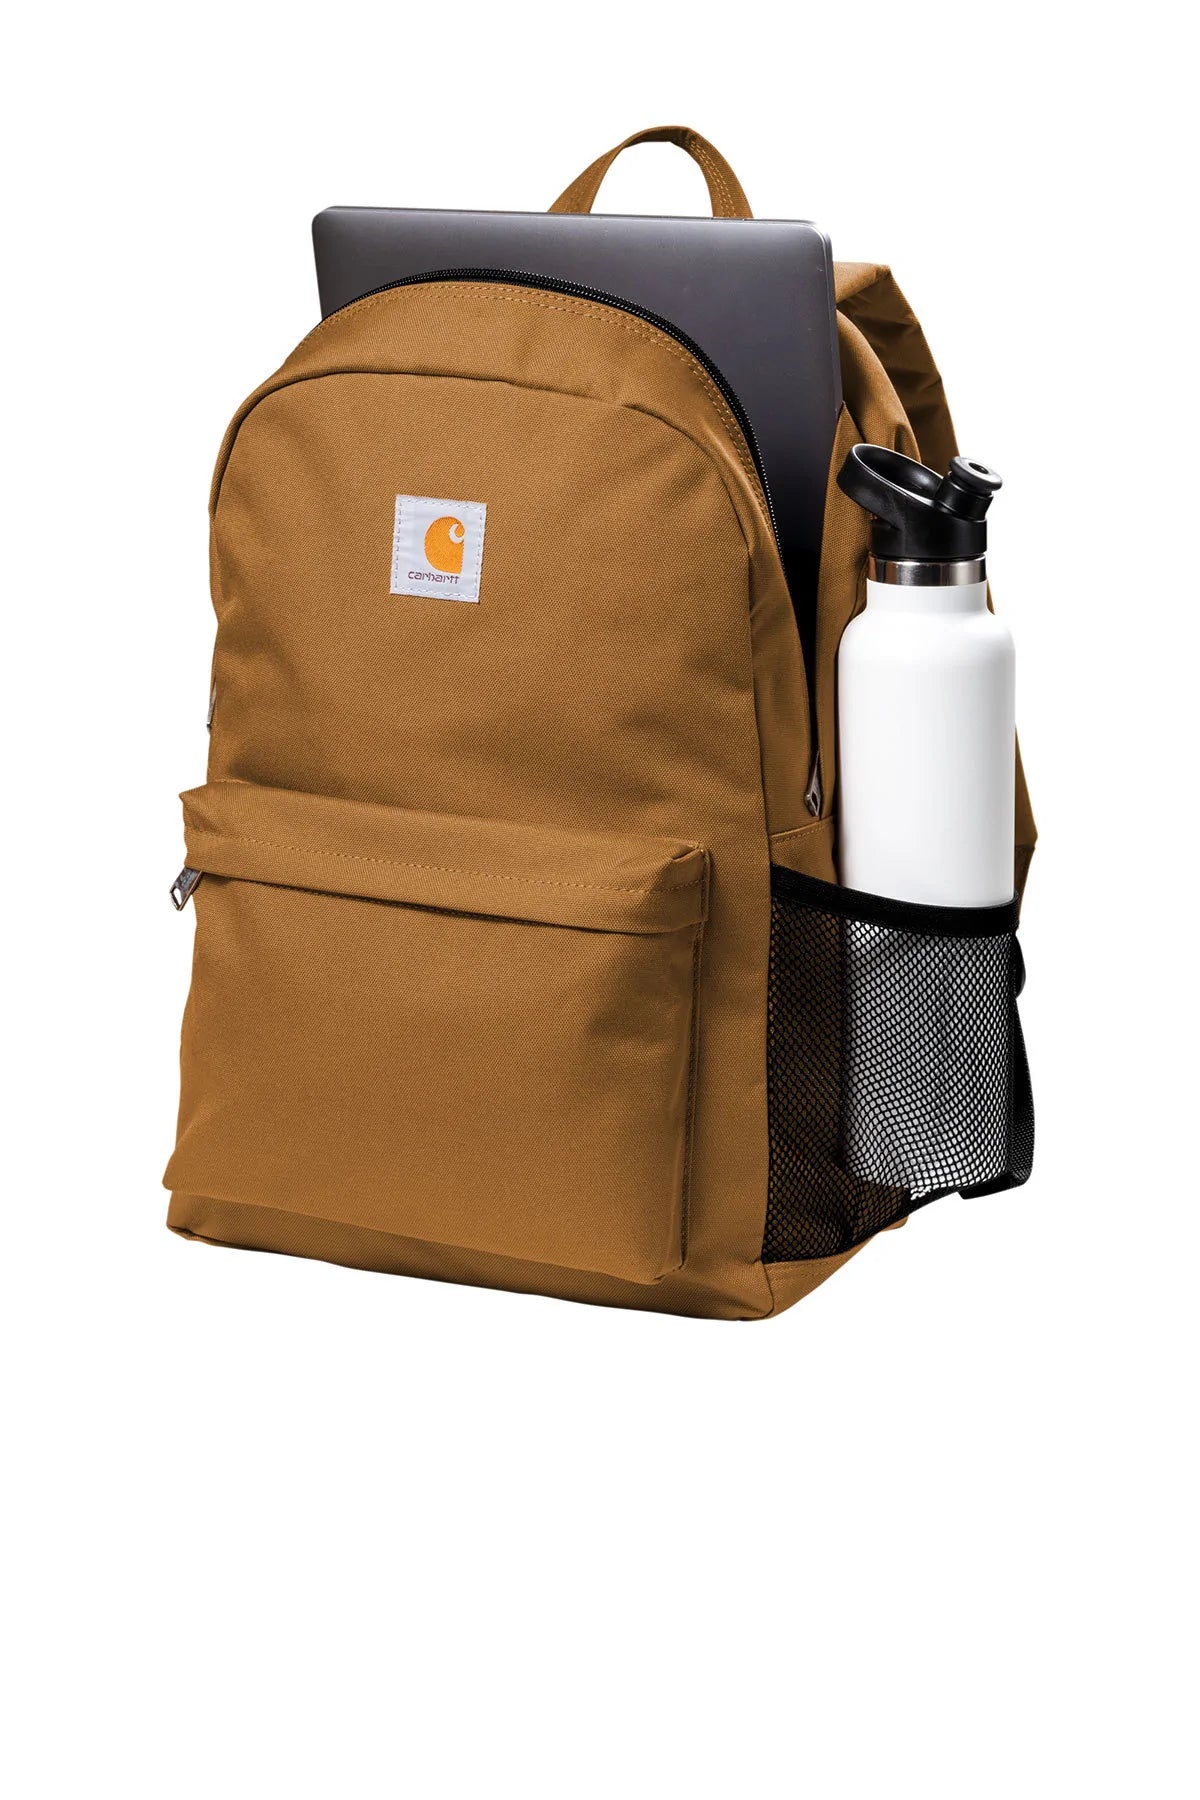 Carhartt Canvas Branded Backpacks,, Carhartt Brown